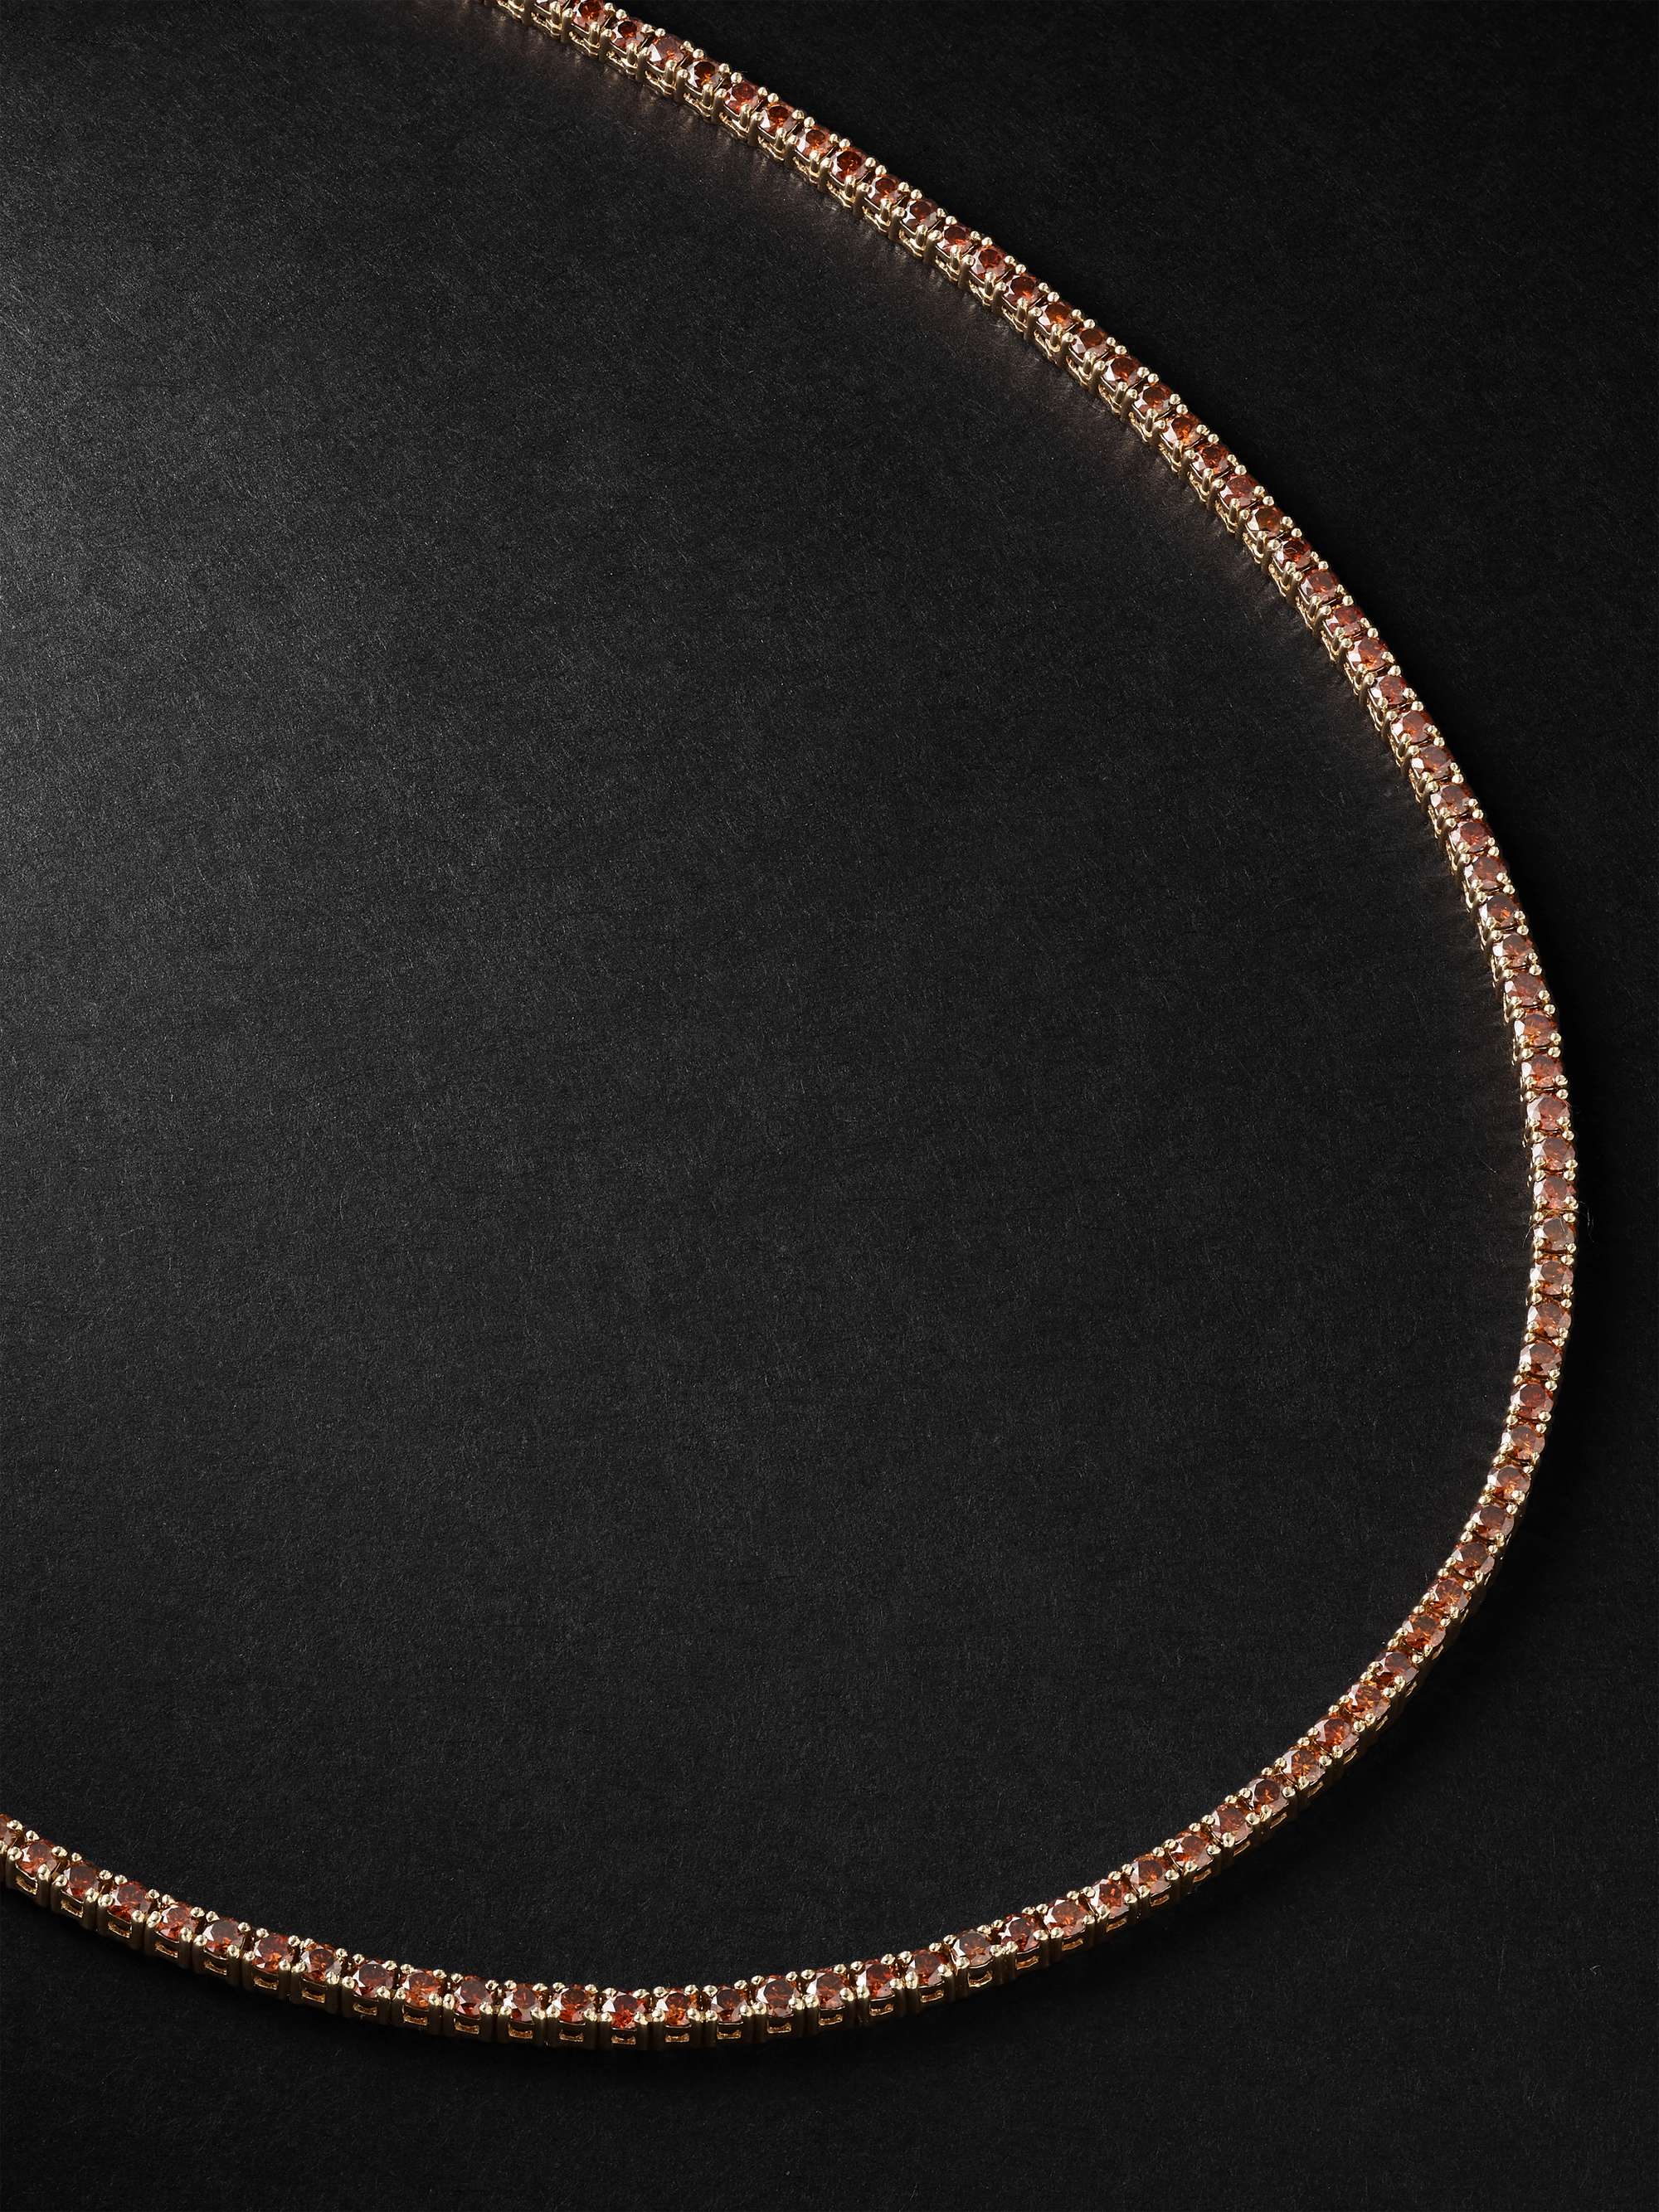 KOLOURS JEWELRY Spectra Pink Gold Diamond Tennis Necklace